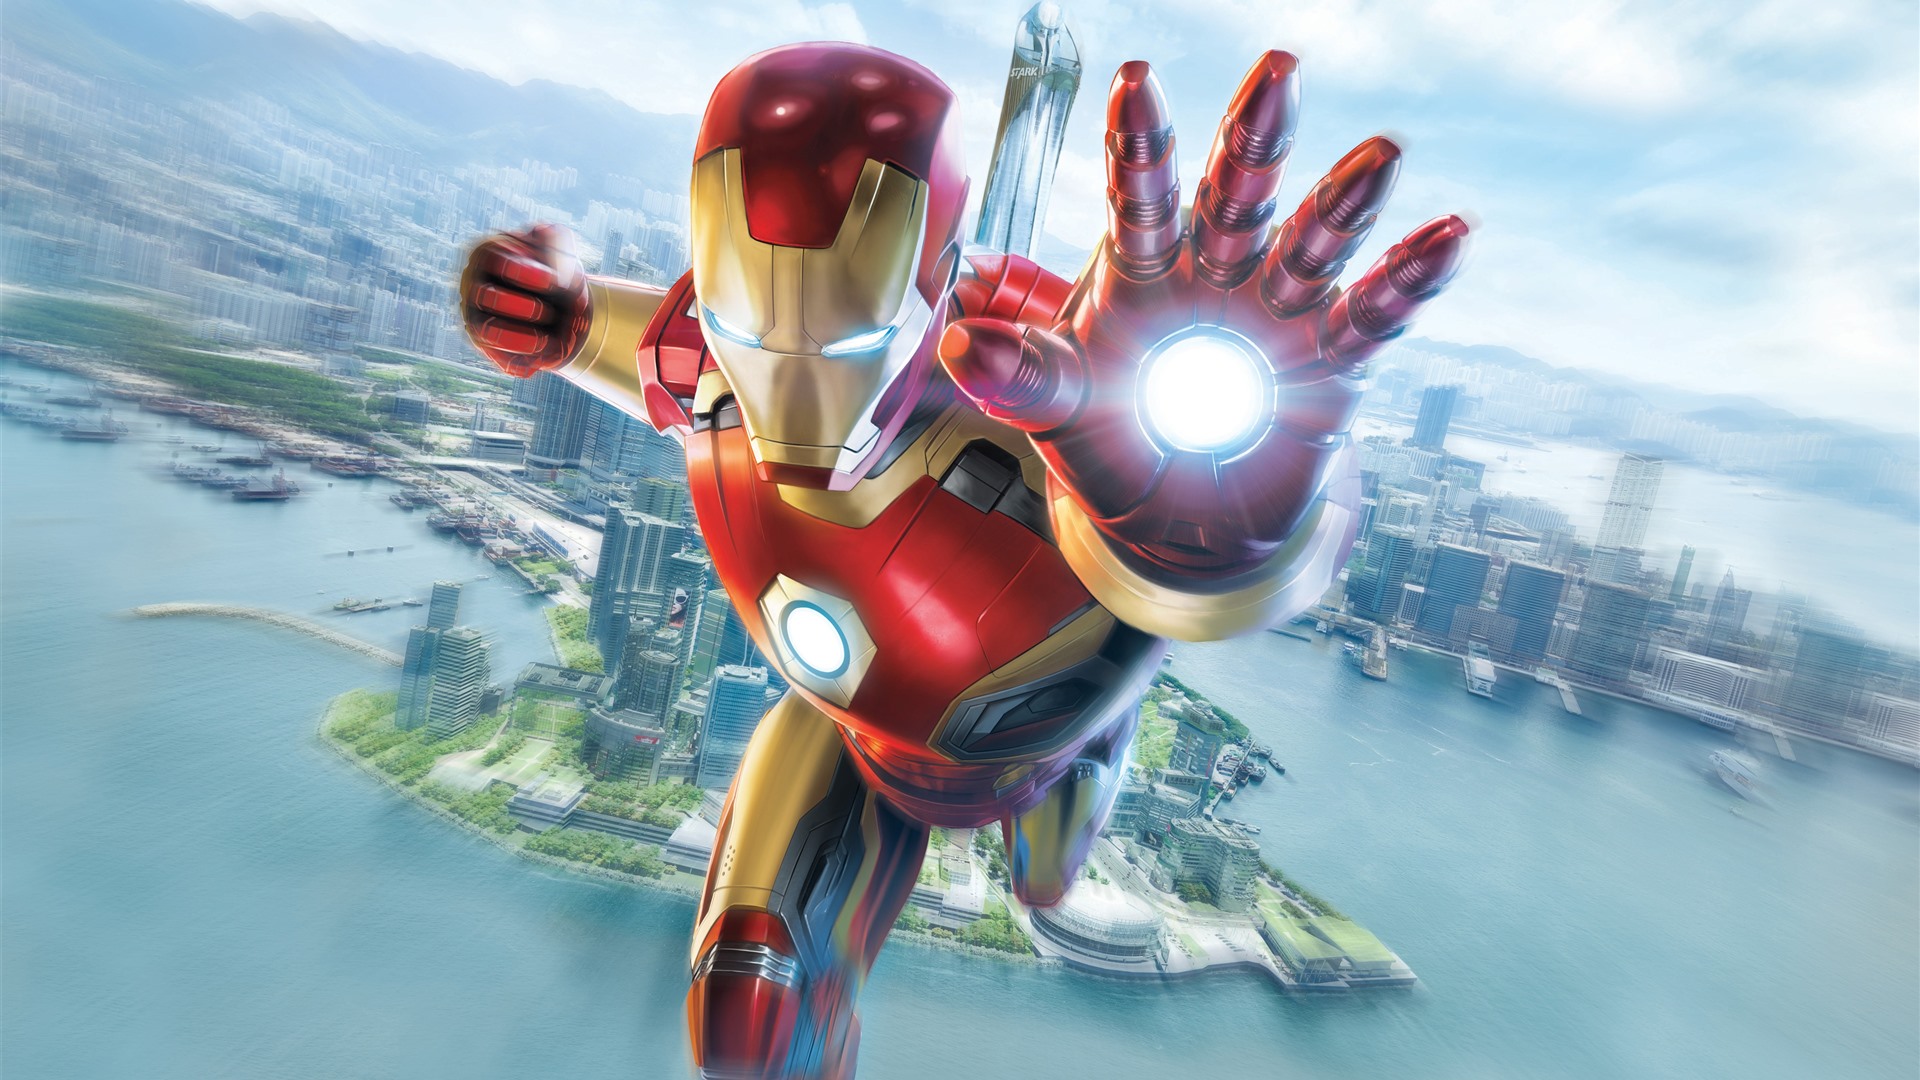 Wallpaper Iron Man, flight, hand, city, sky 3840x2160 UHD 4K Picture, Image